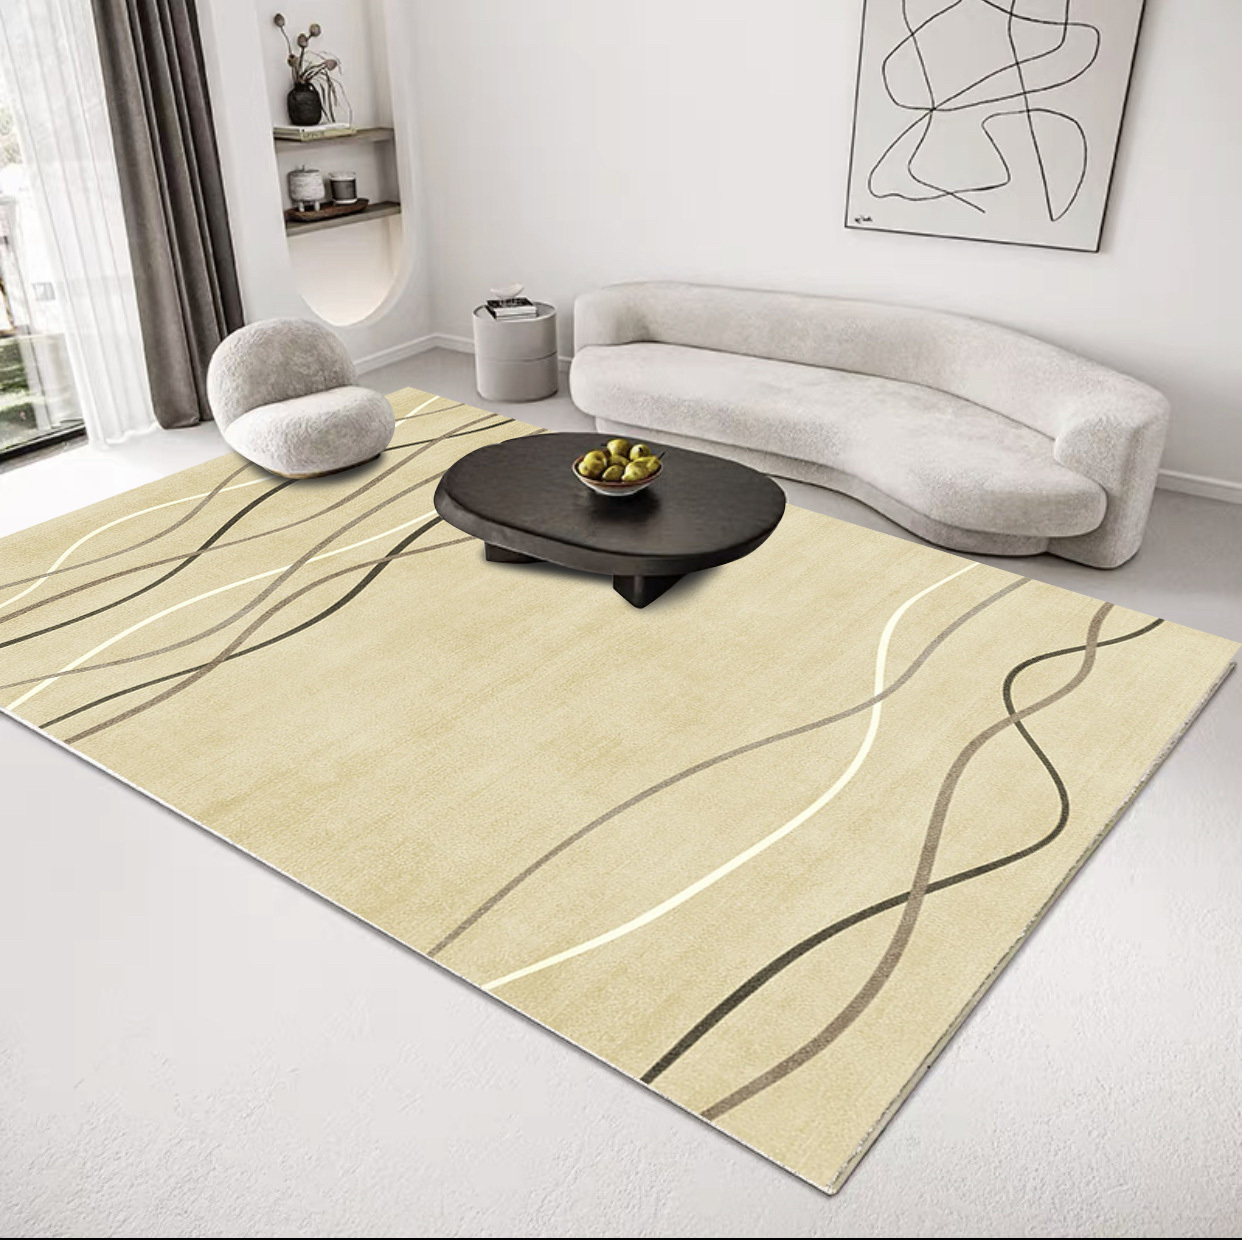 XL Extra Large Lush Plush Ripple Carpet Rug (300 x 200)